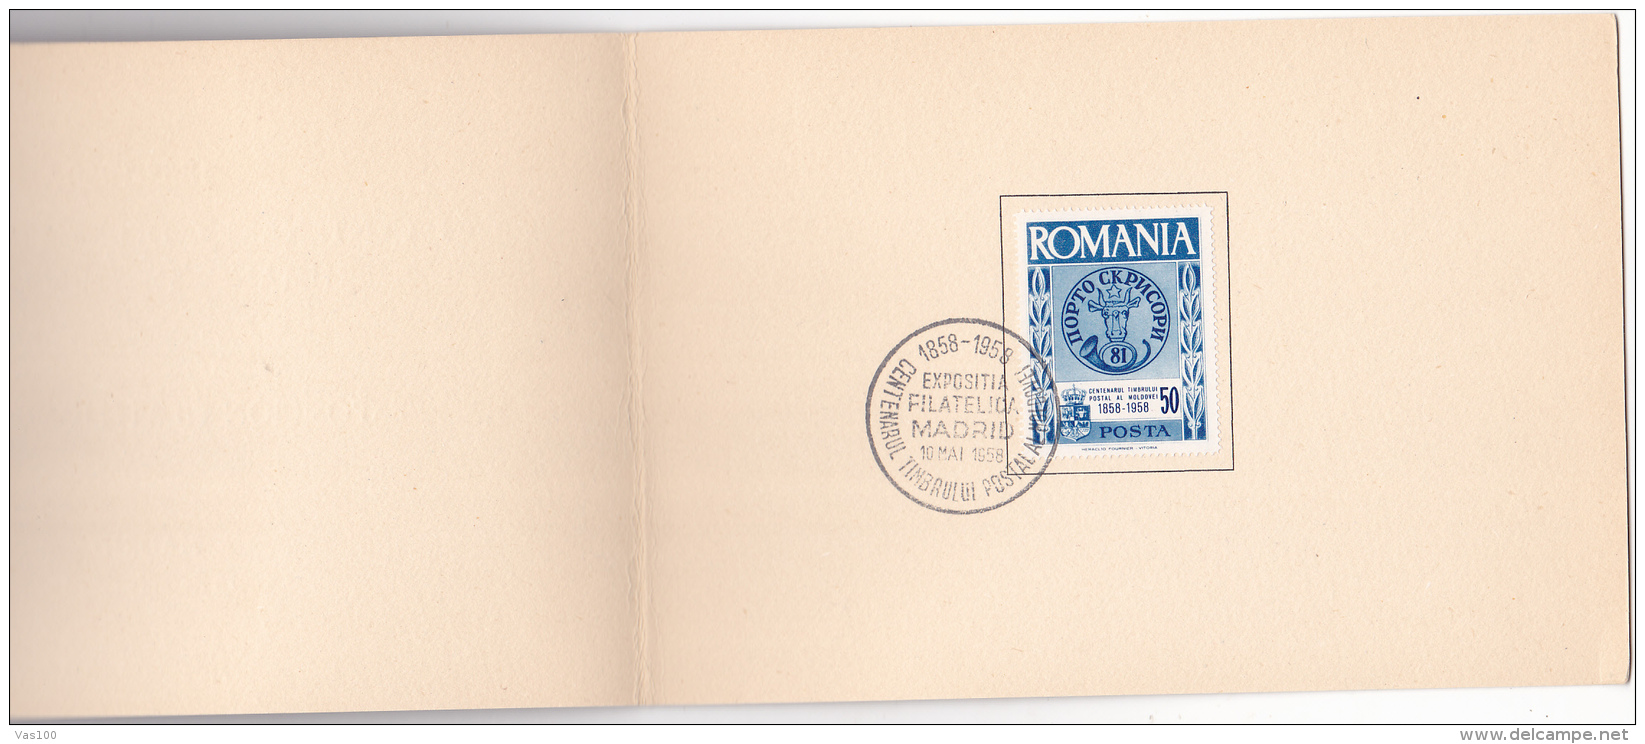 #T99     CENTENARY OF ROMANIAN STAMP FROM MOLDAVIA, ,    BOOKLETS,   1958  , SPAIN EXIL, ROMANIA. - Markenheftchen